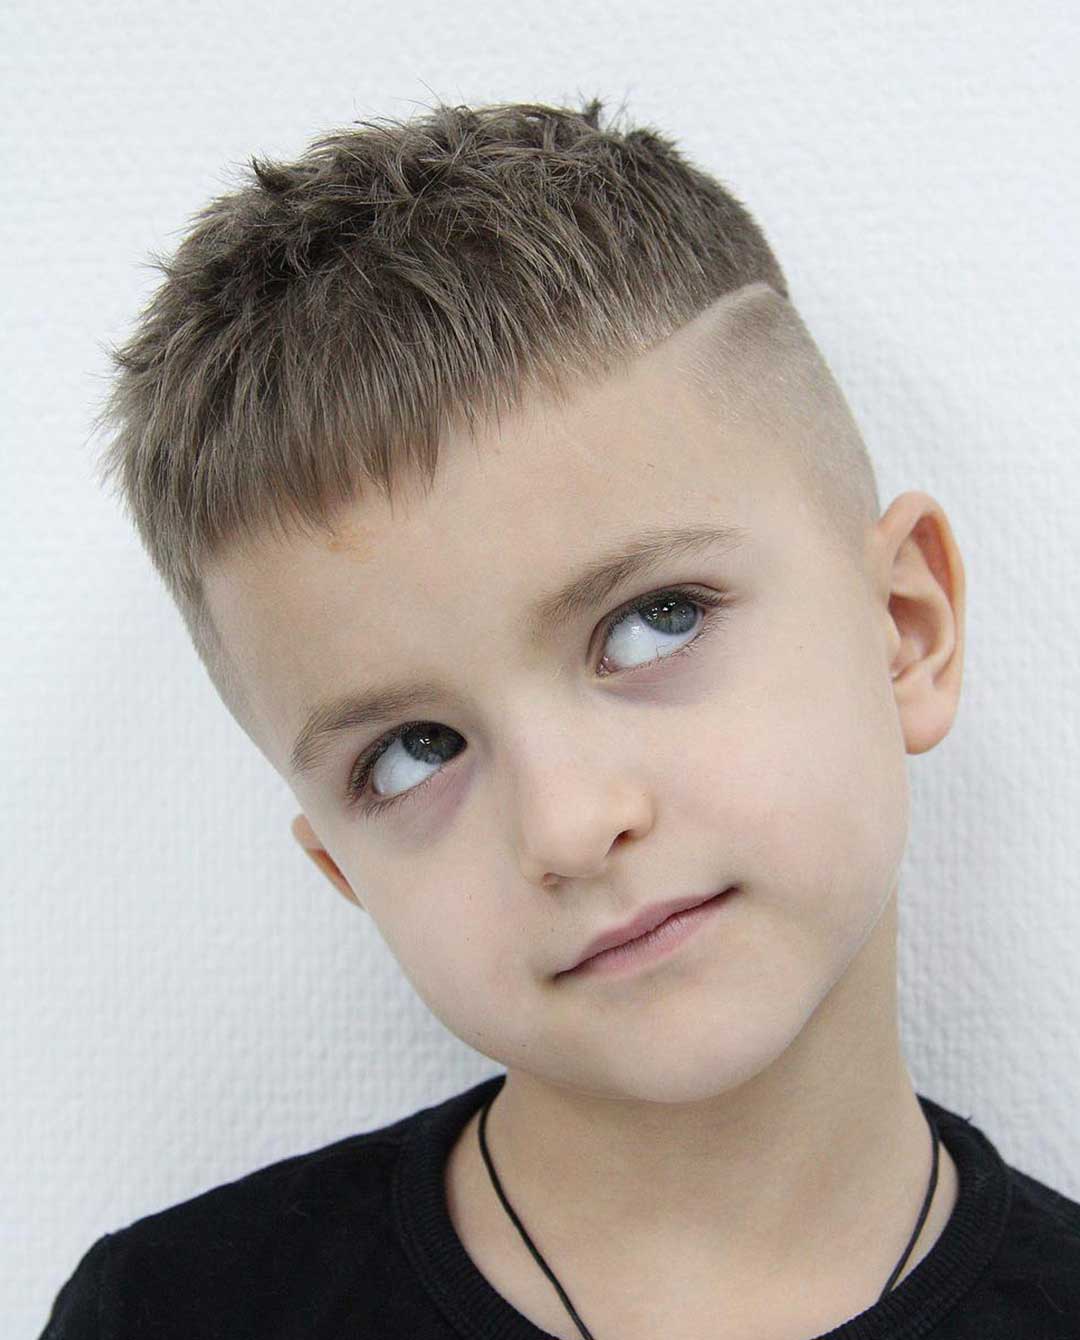 Haircuts for Kids